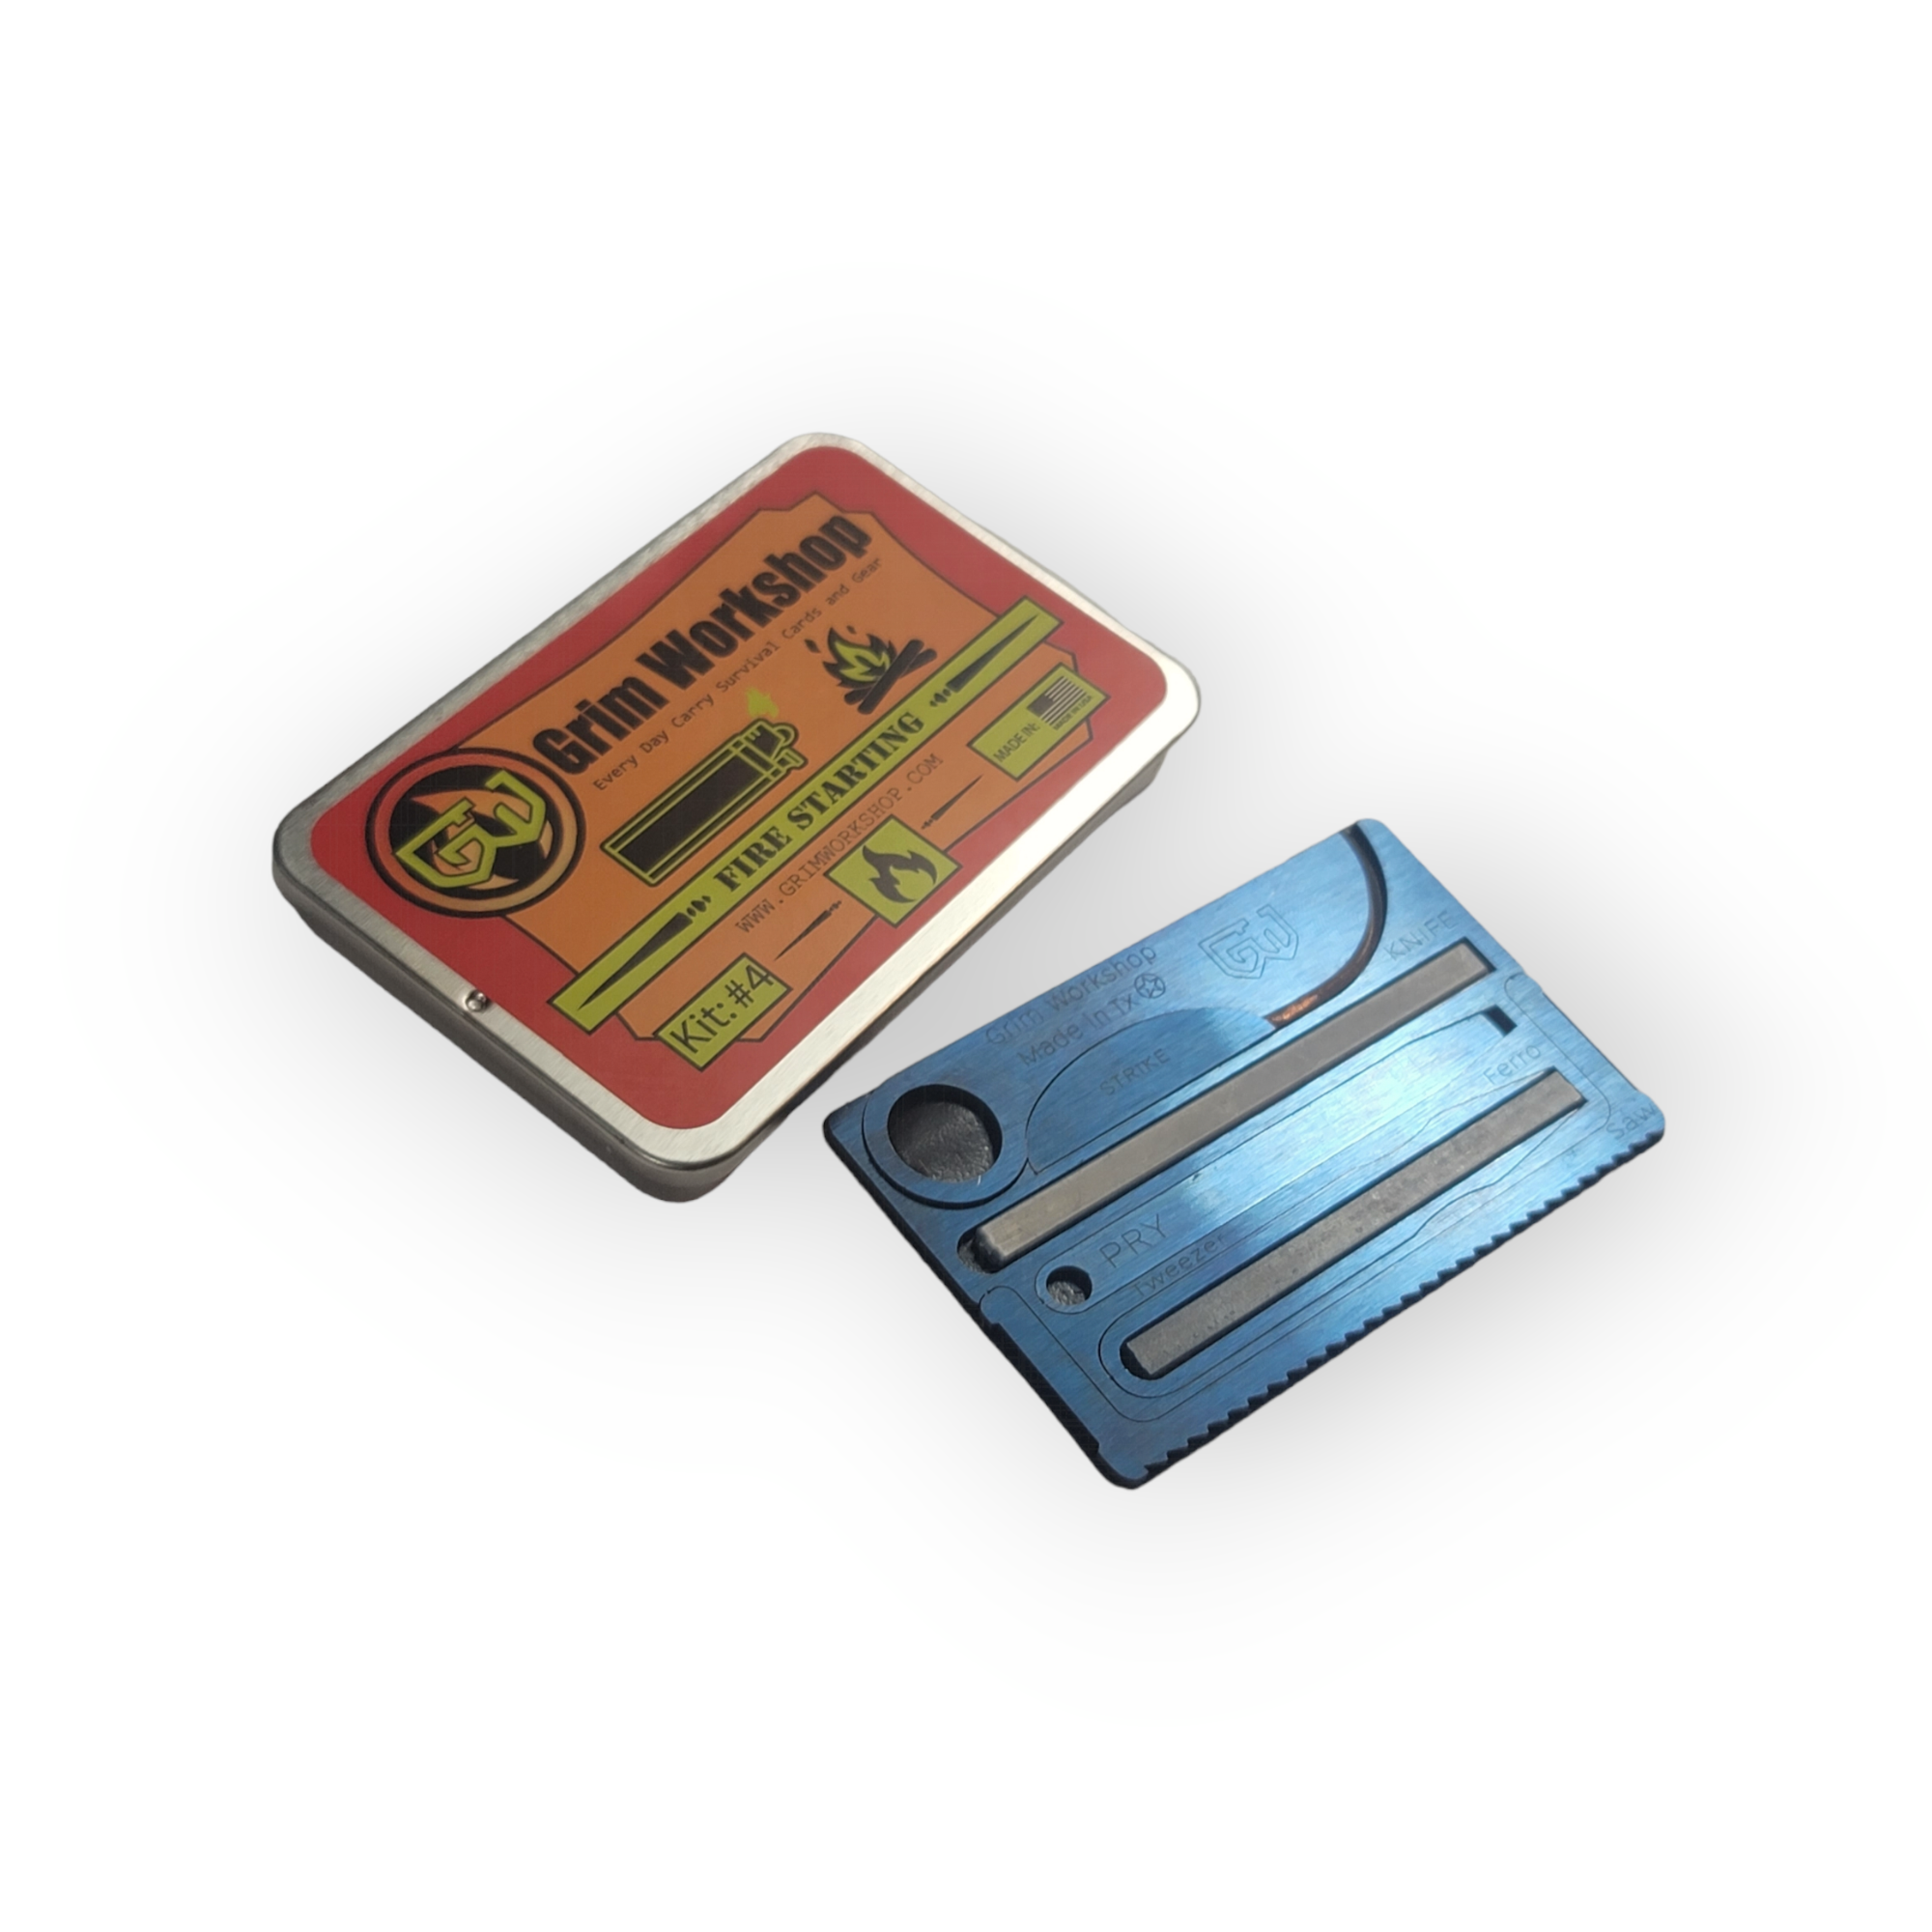 Hot Shot Fire Card Gen2: Survival Knife with Fire Starter Cards (PRE ORDER)